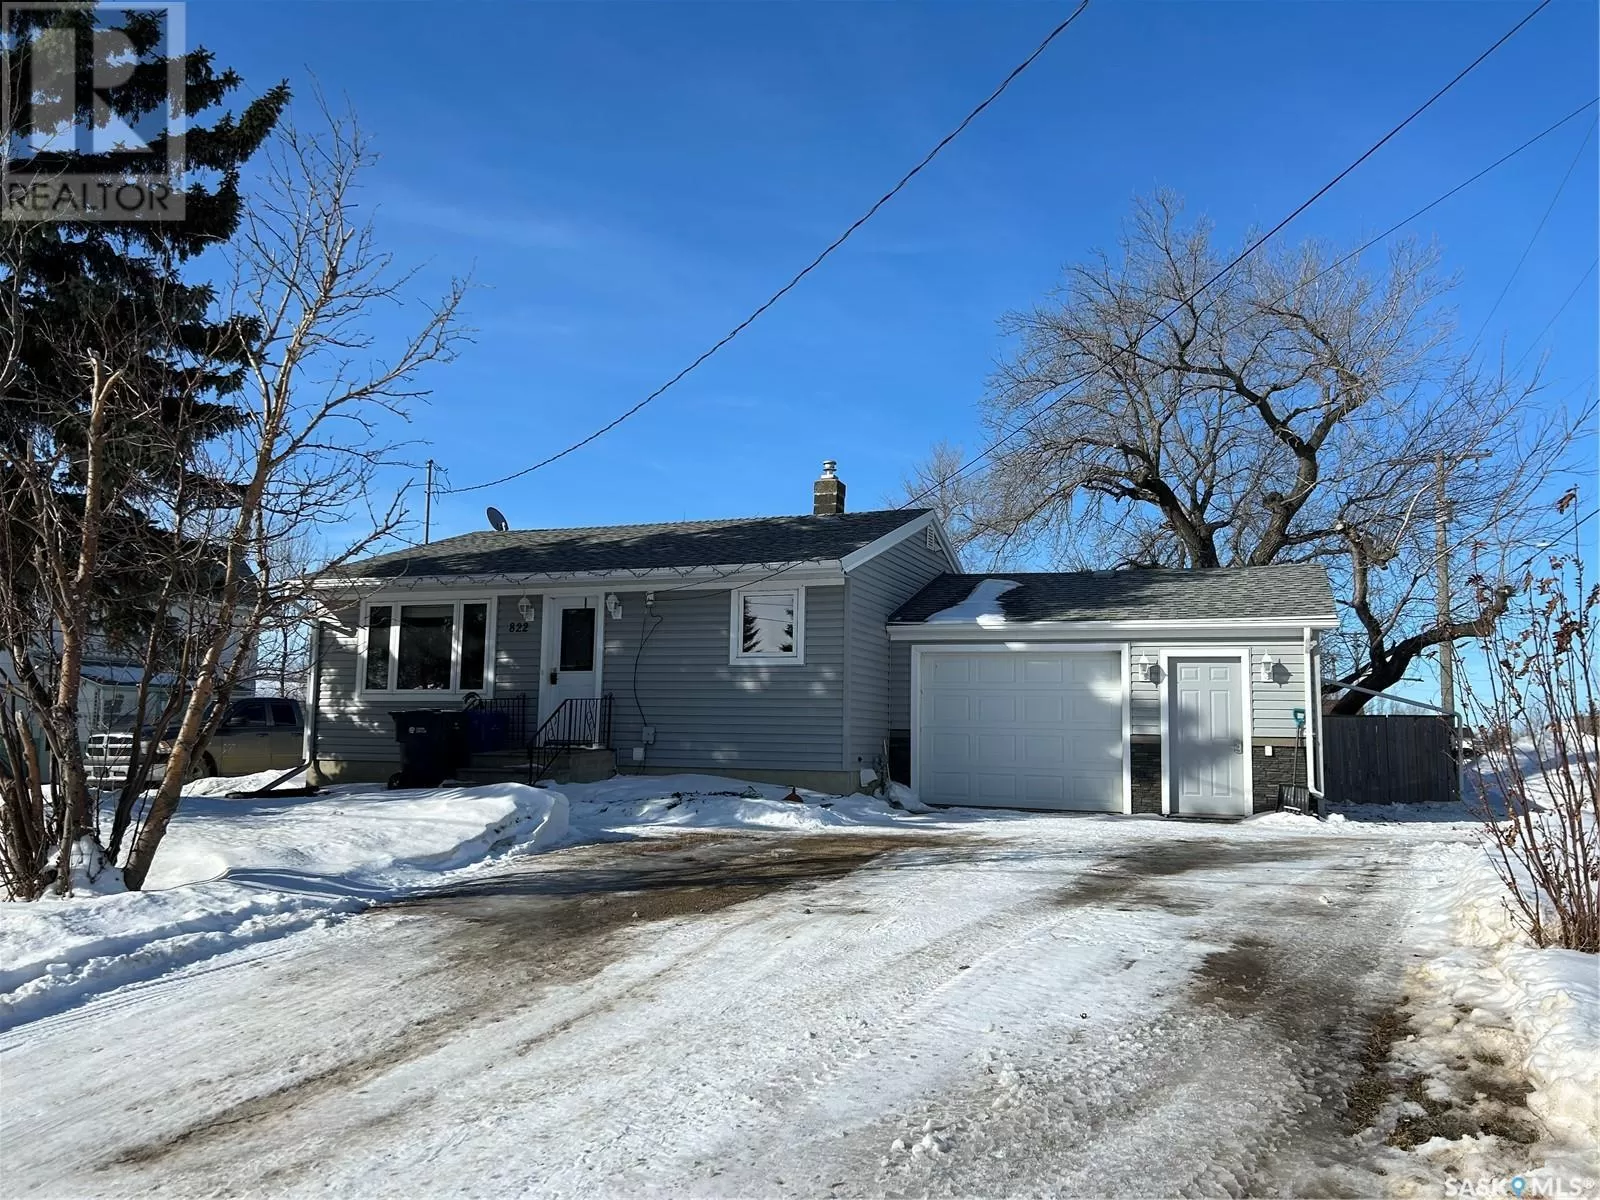 House for rent: 822 Main Street, Oxbow, Saskatchewan S0C 2B0